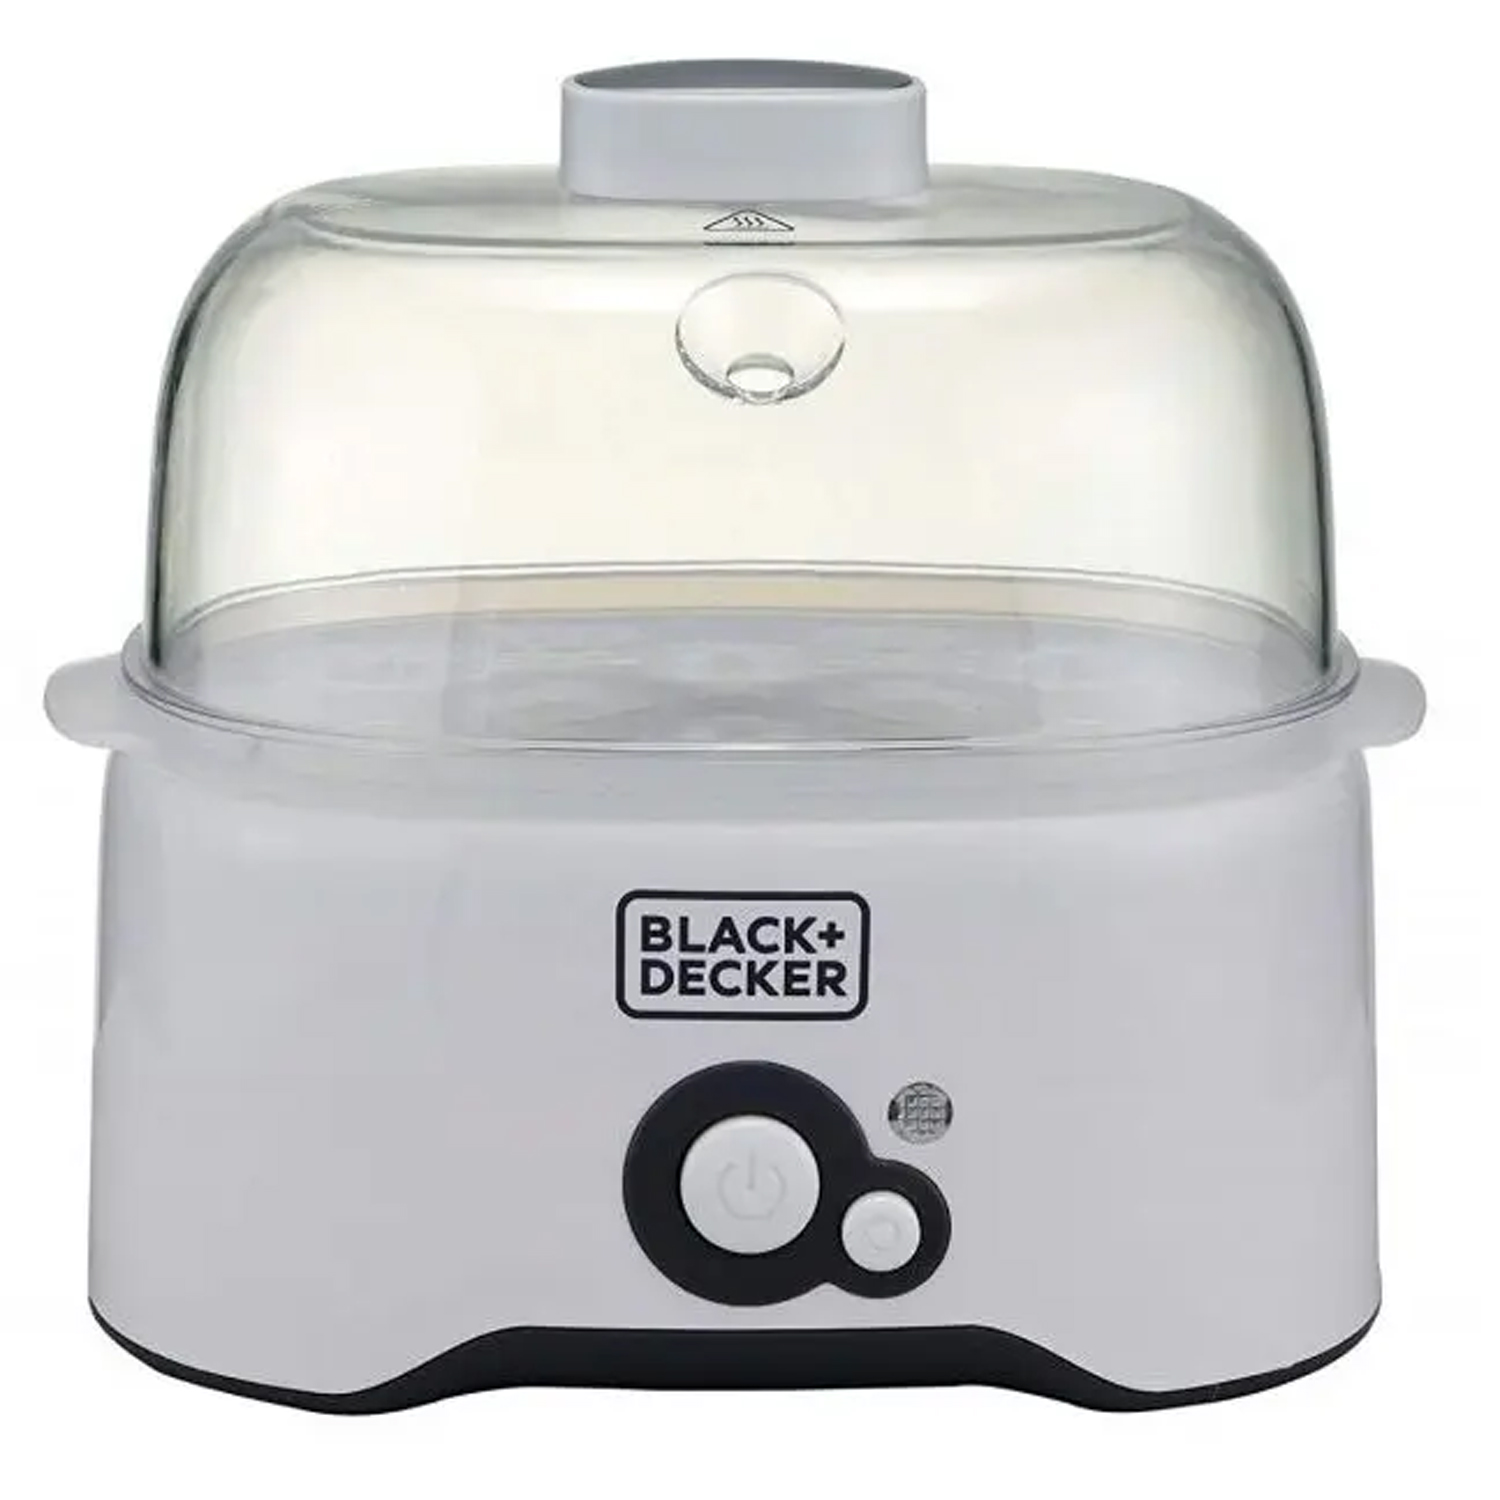 Black & Decker 3 Tier Food Steamer, Hs6000-B5, White,10 Liters, Plastic  Material - 220-240 volt 50 Hz - World Import